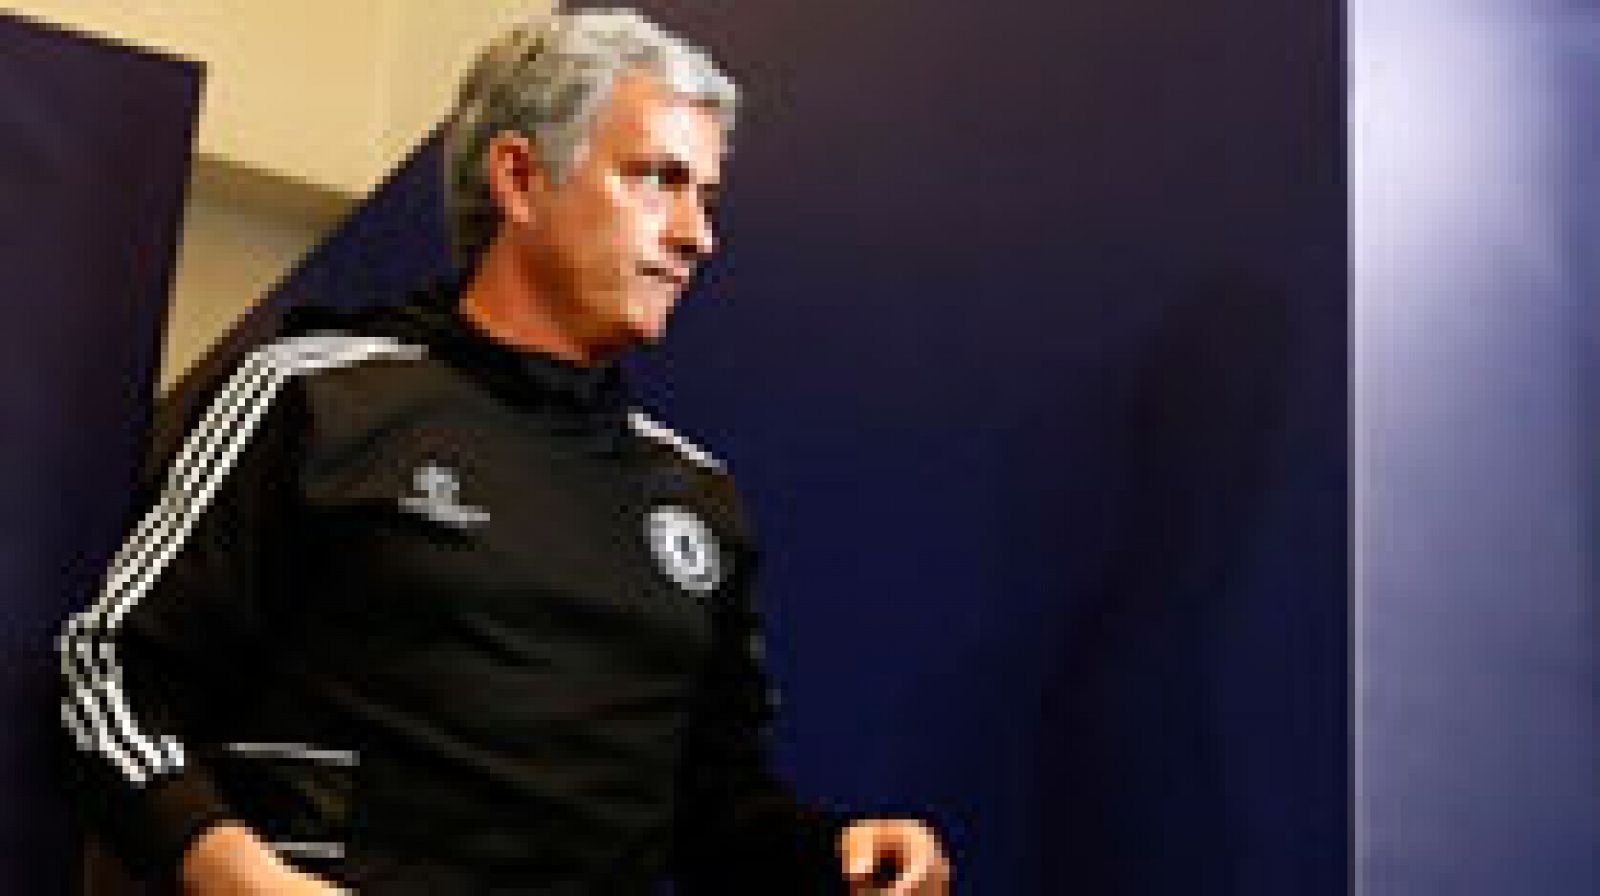 Telediario 1: Mourinho: "Las decisiones de la UEFA se aceptan, no se comentan" | RTVE Play